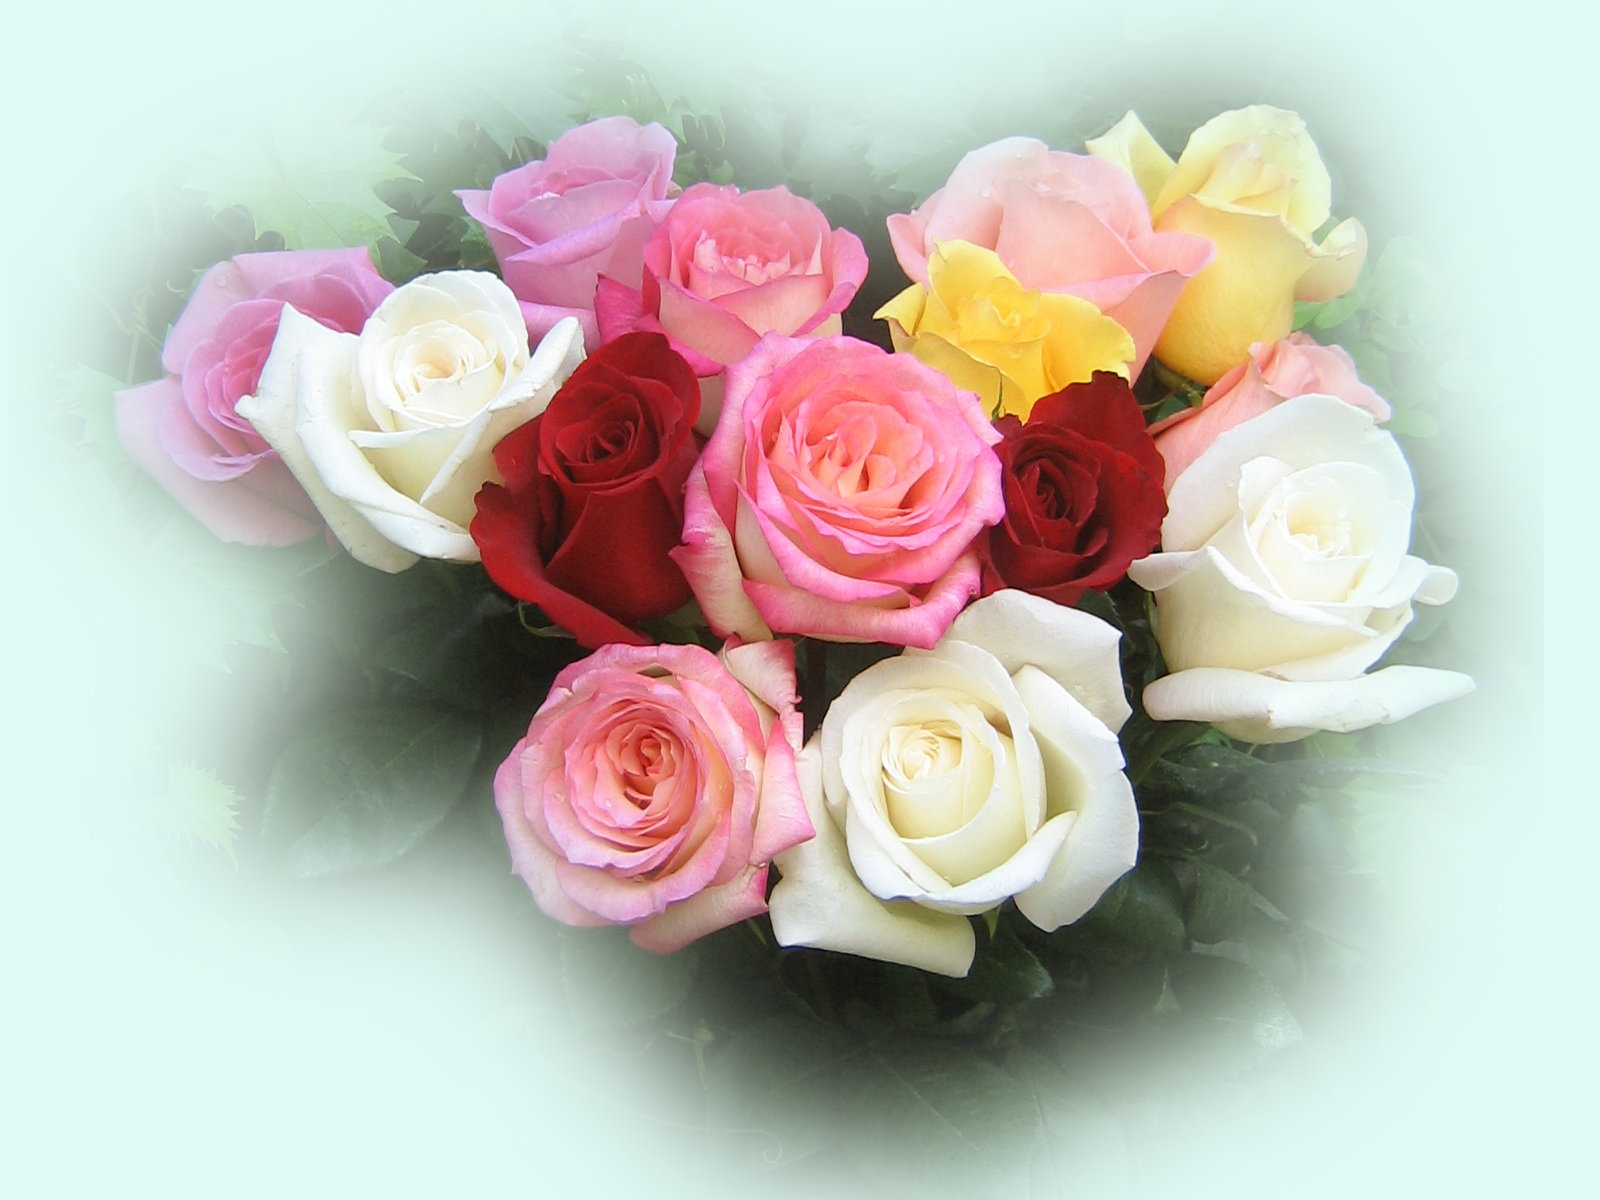 roses_bouquet_3565.jpg